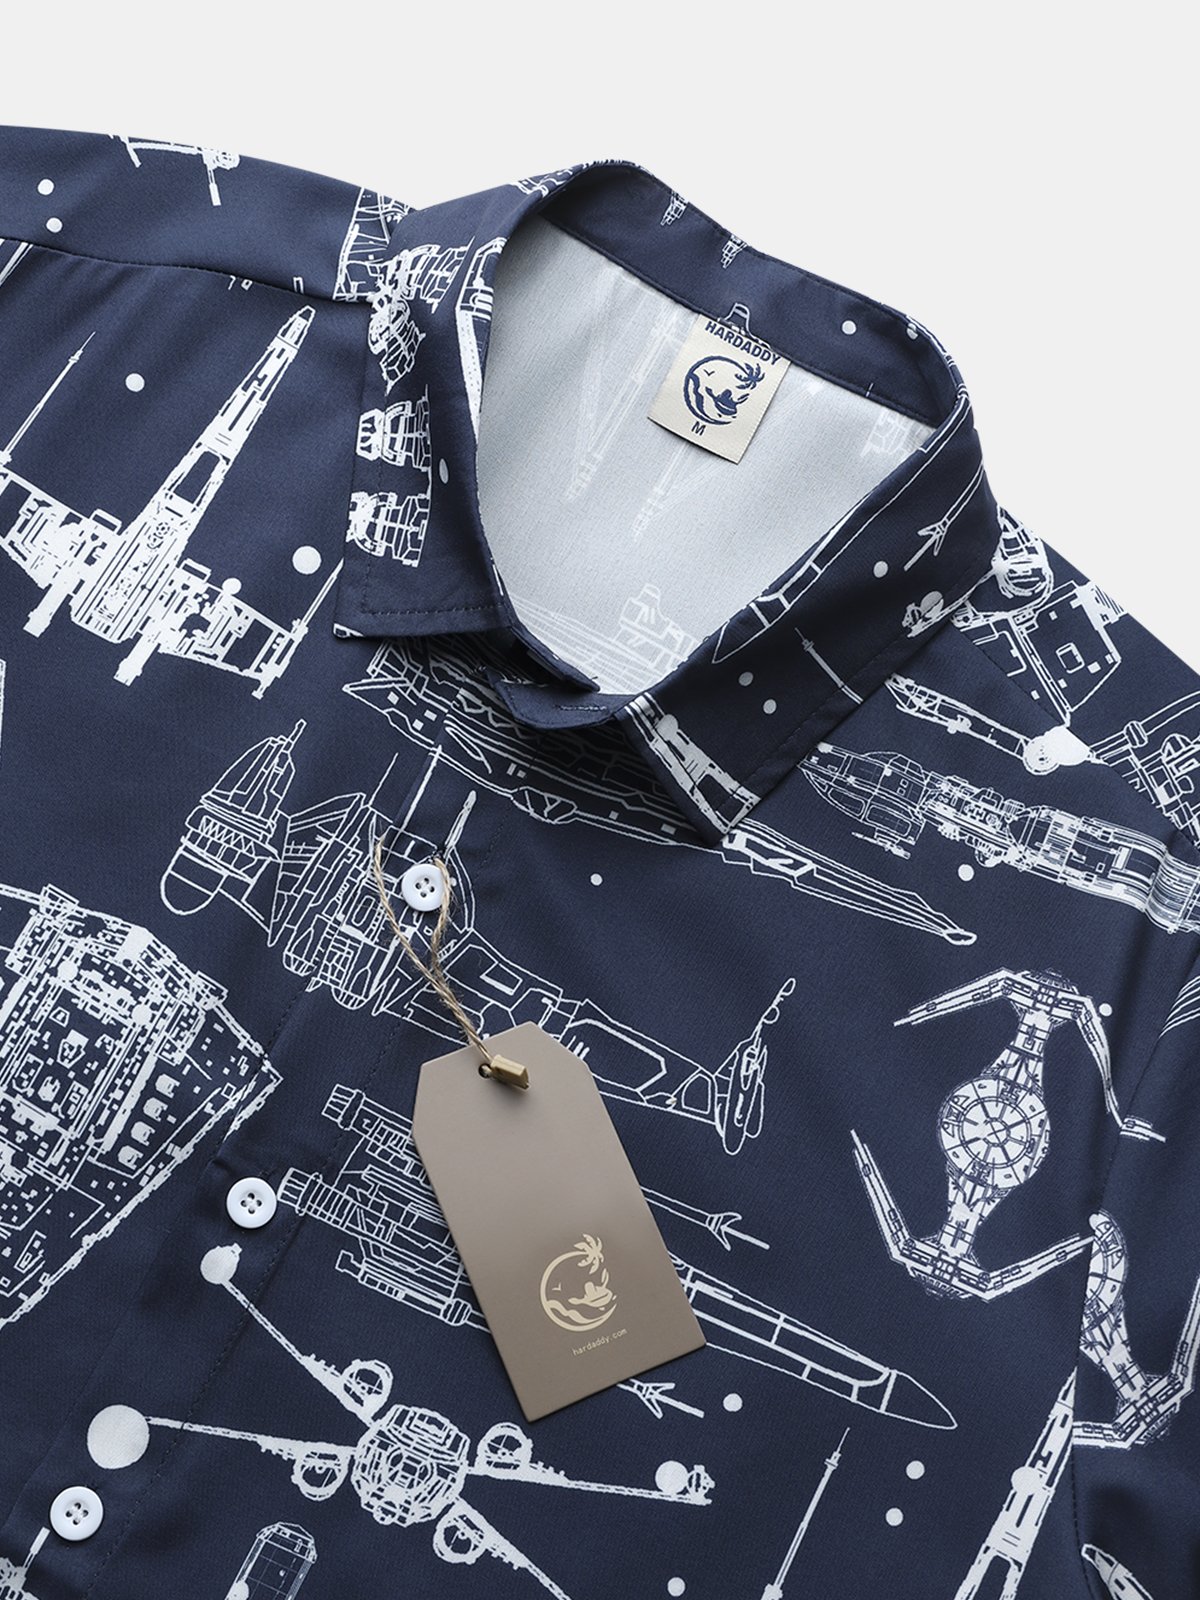 Hardaddy Mens Aerospace Machine Print Casual Breathable Short Sleeve Hawaiian Shirt